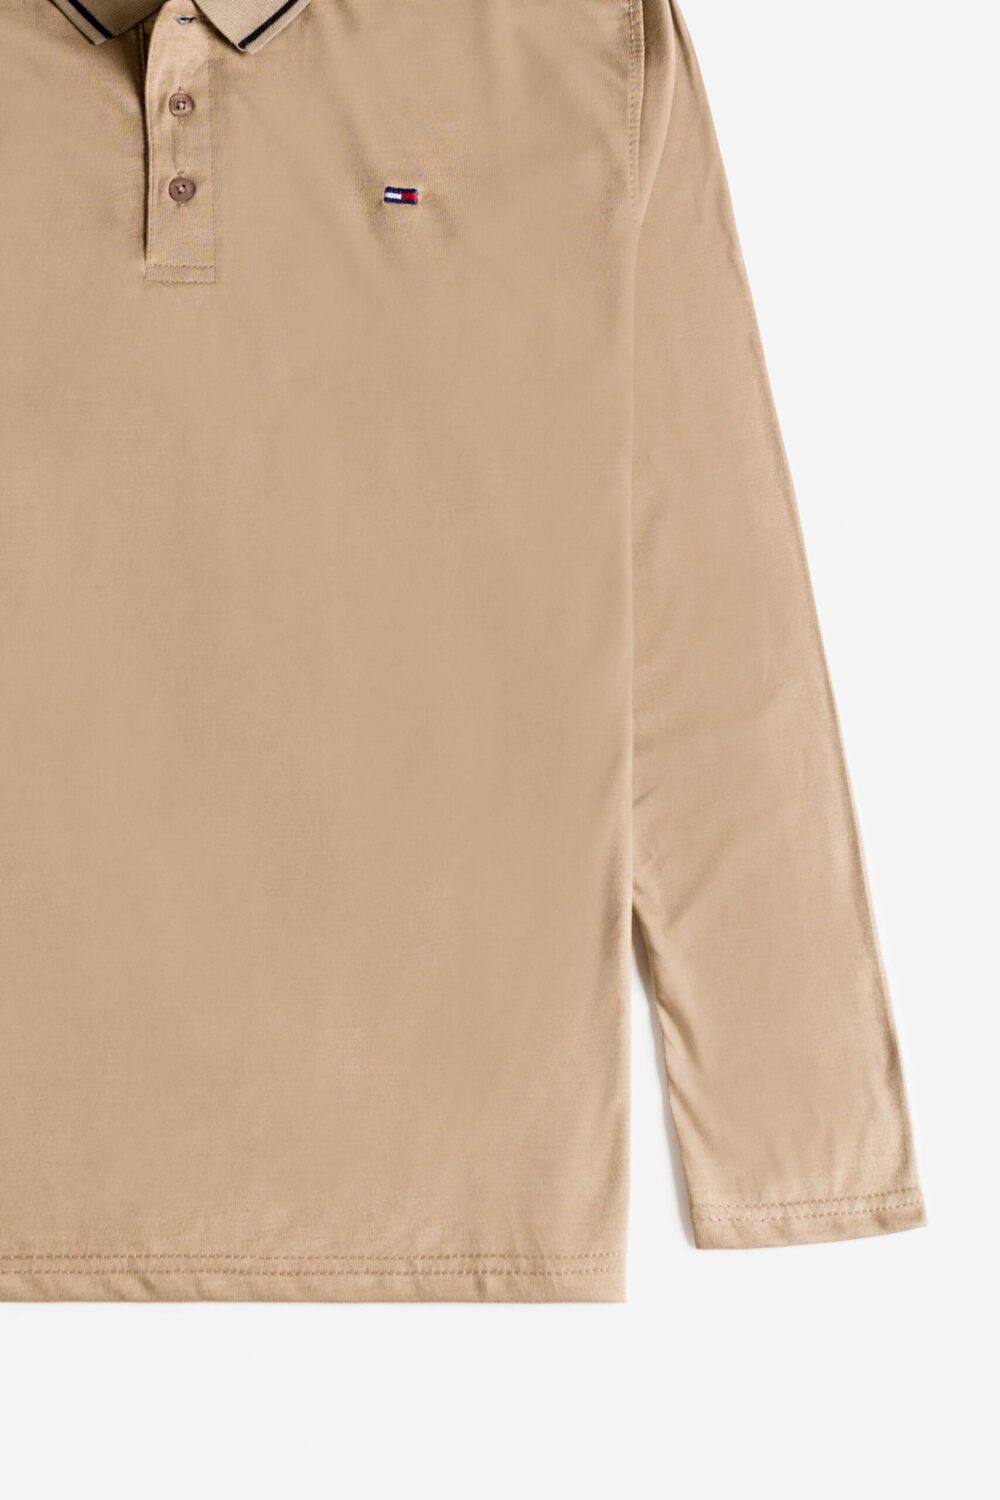 Tommy Cotton Full Polo Shirt – Mushroom Grey